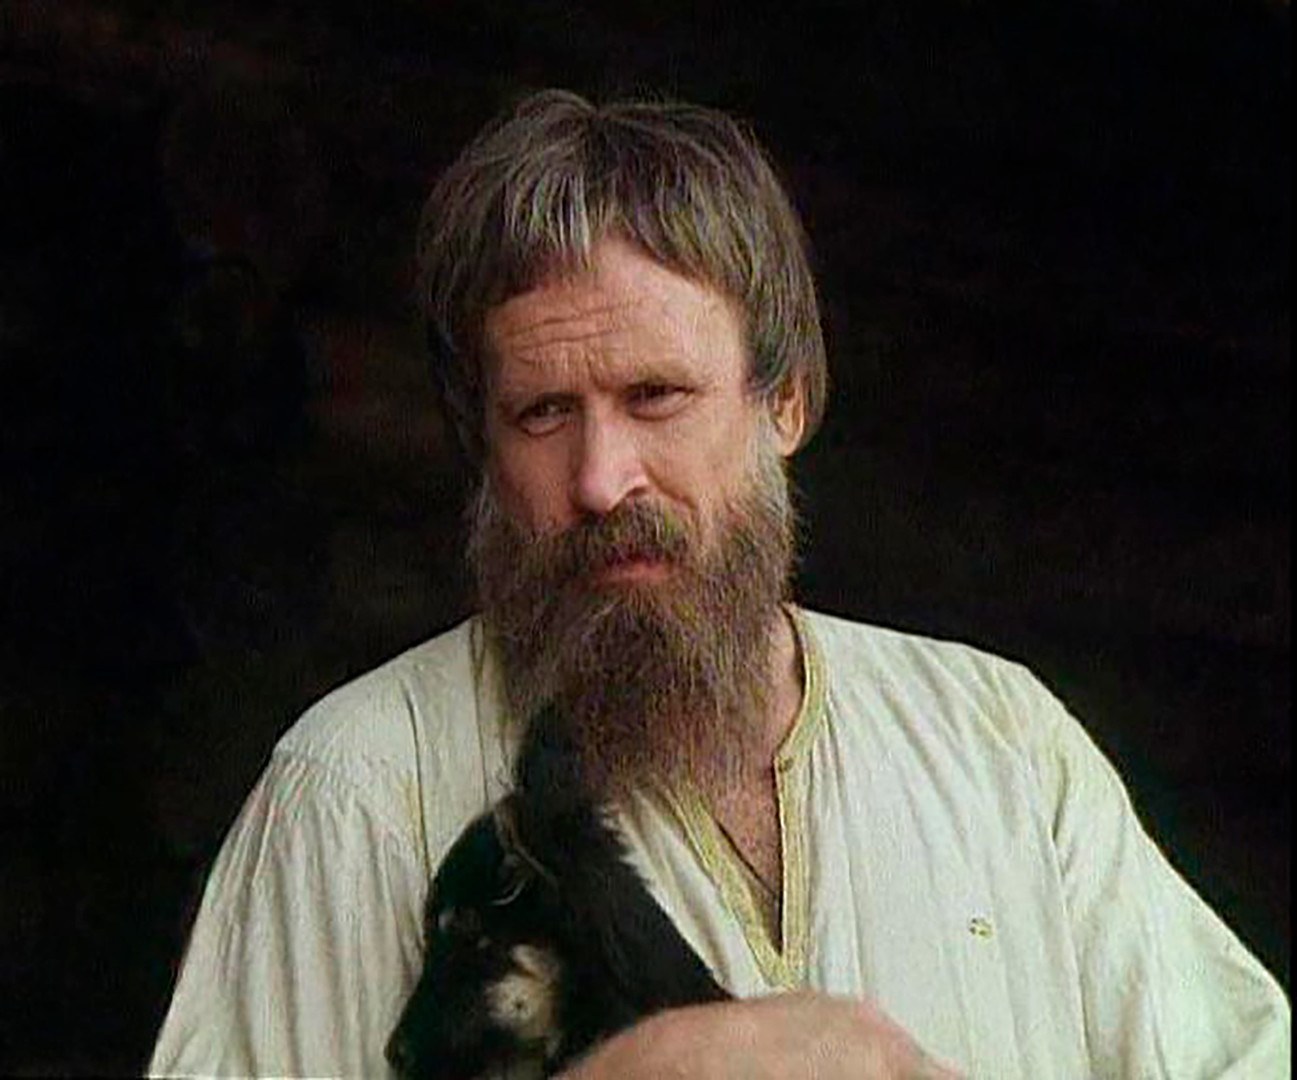 Boyar Kuchka. A frame from the Yuri Dolgoruky movie (1998).